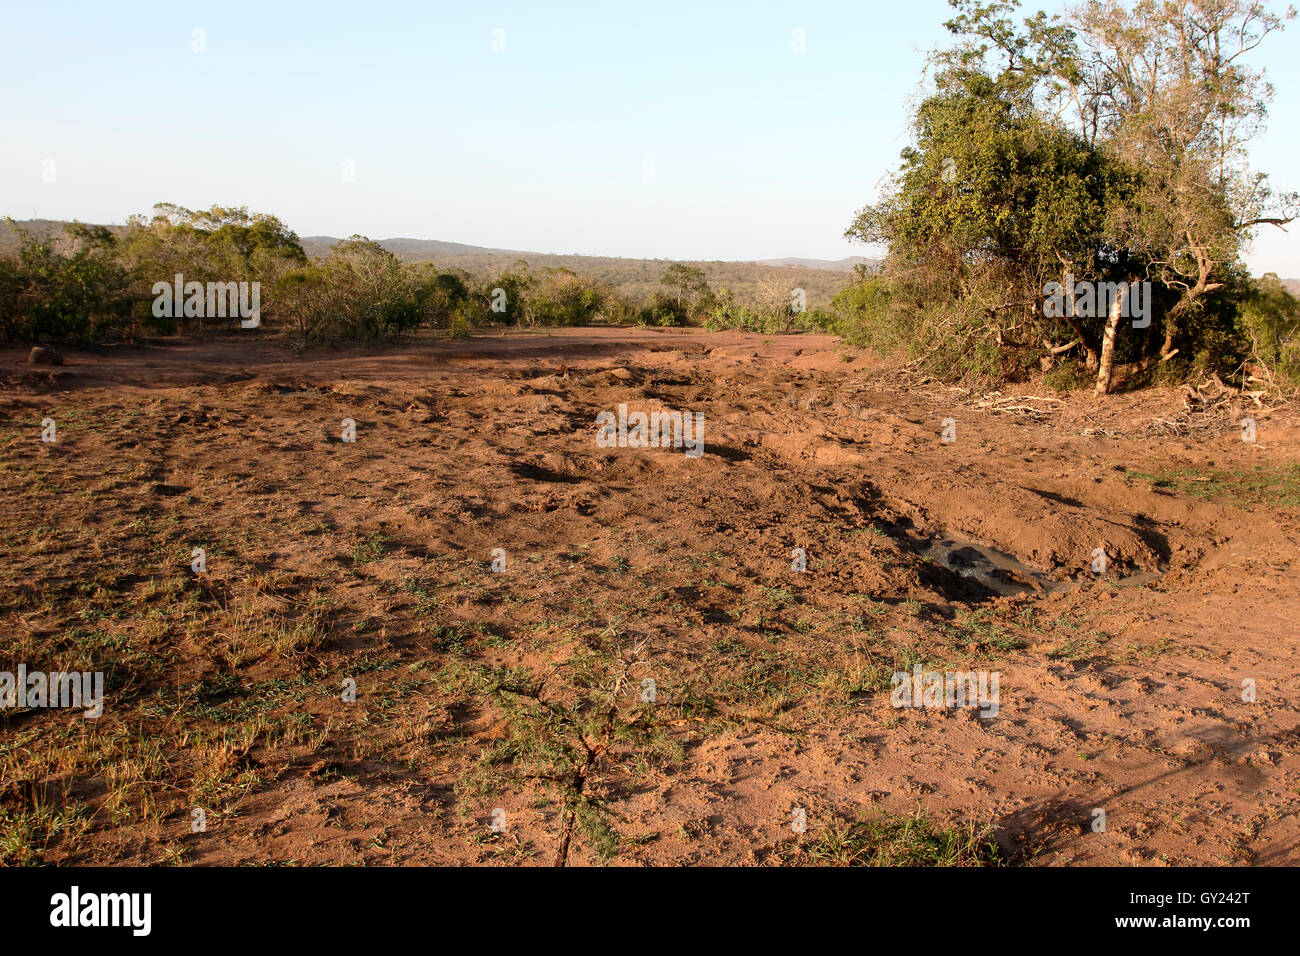 Thiyeni verstecken, Hluhluwe Game Reserve, Südafrika, August 2016 Stockfoto